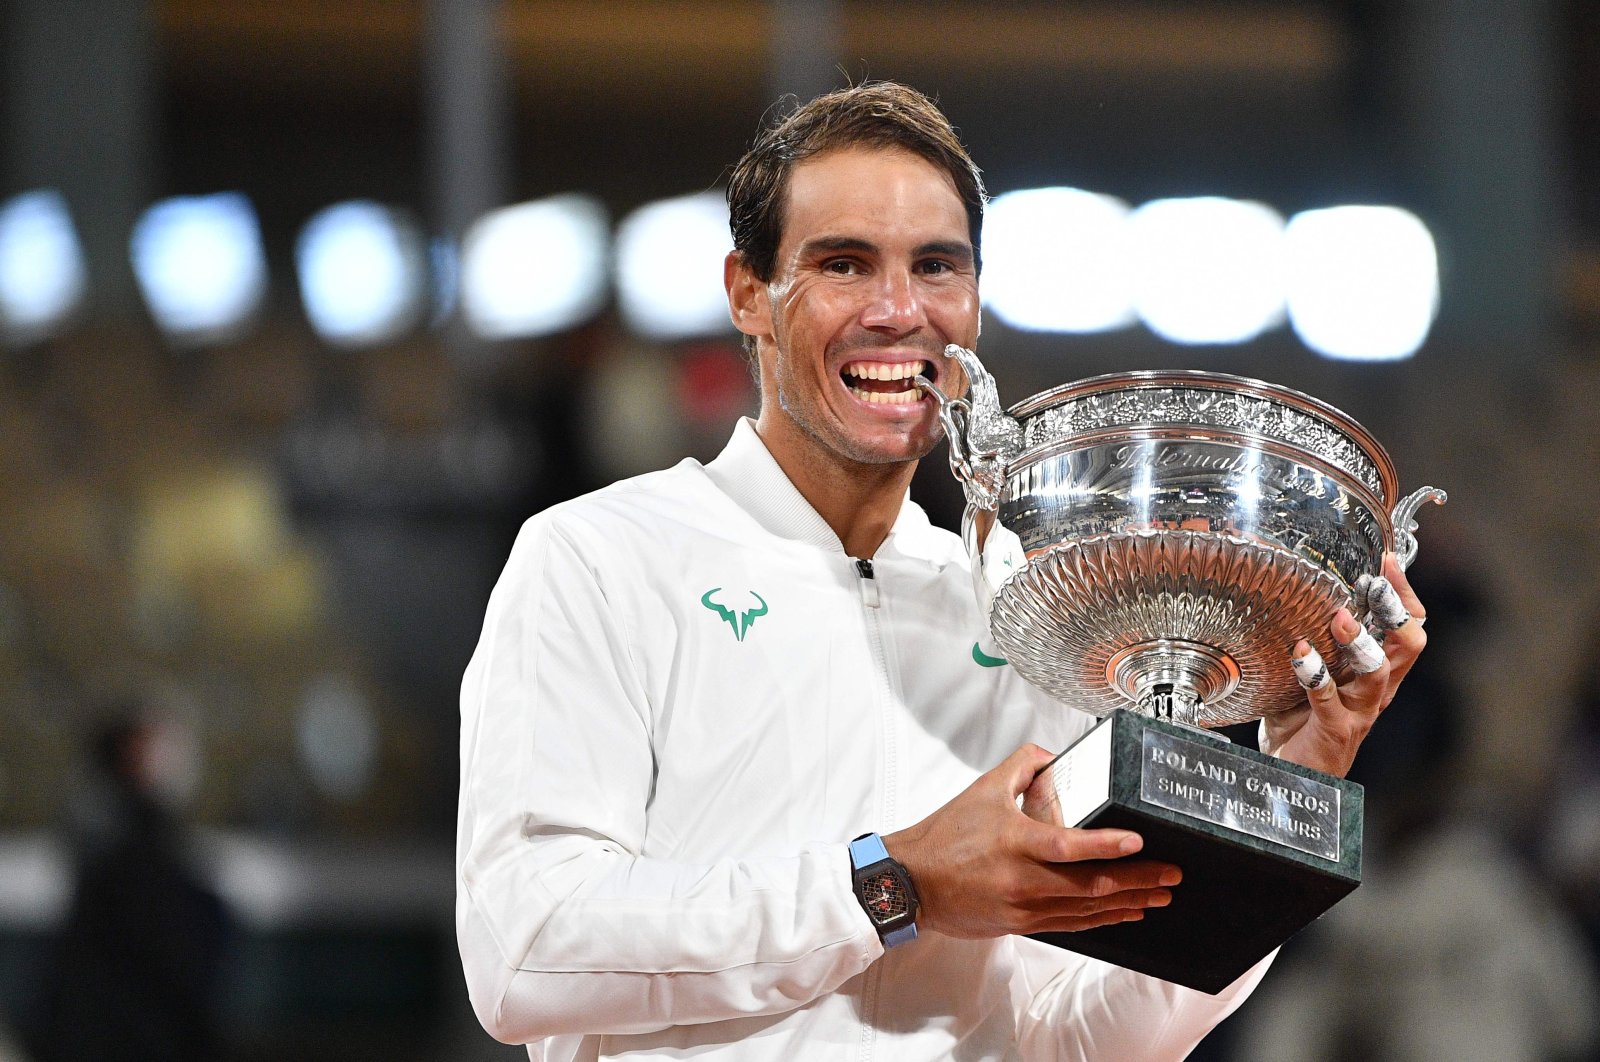 Rafael Nadal bites the French Open trophy as he celebrates winning the men's singles final against Novak Djokovic, in Paris, France, Oct. 11, 2020. (AFP Photo)